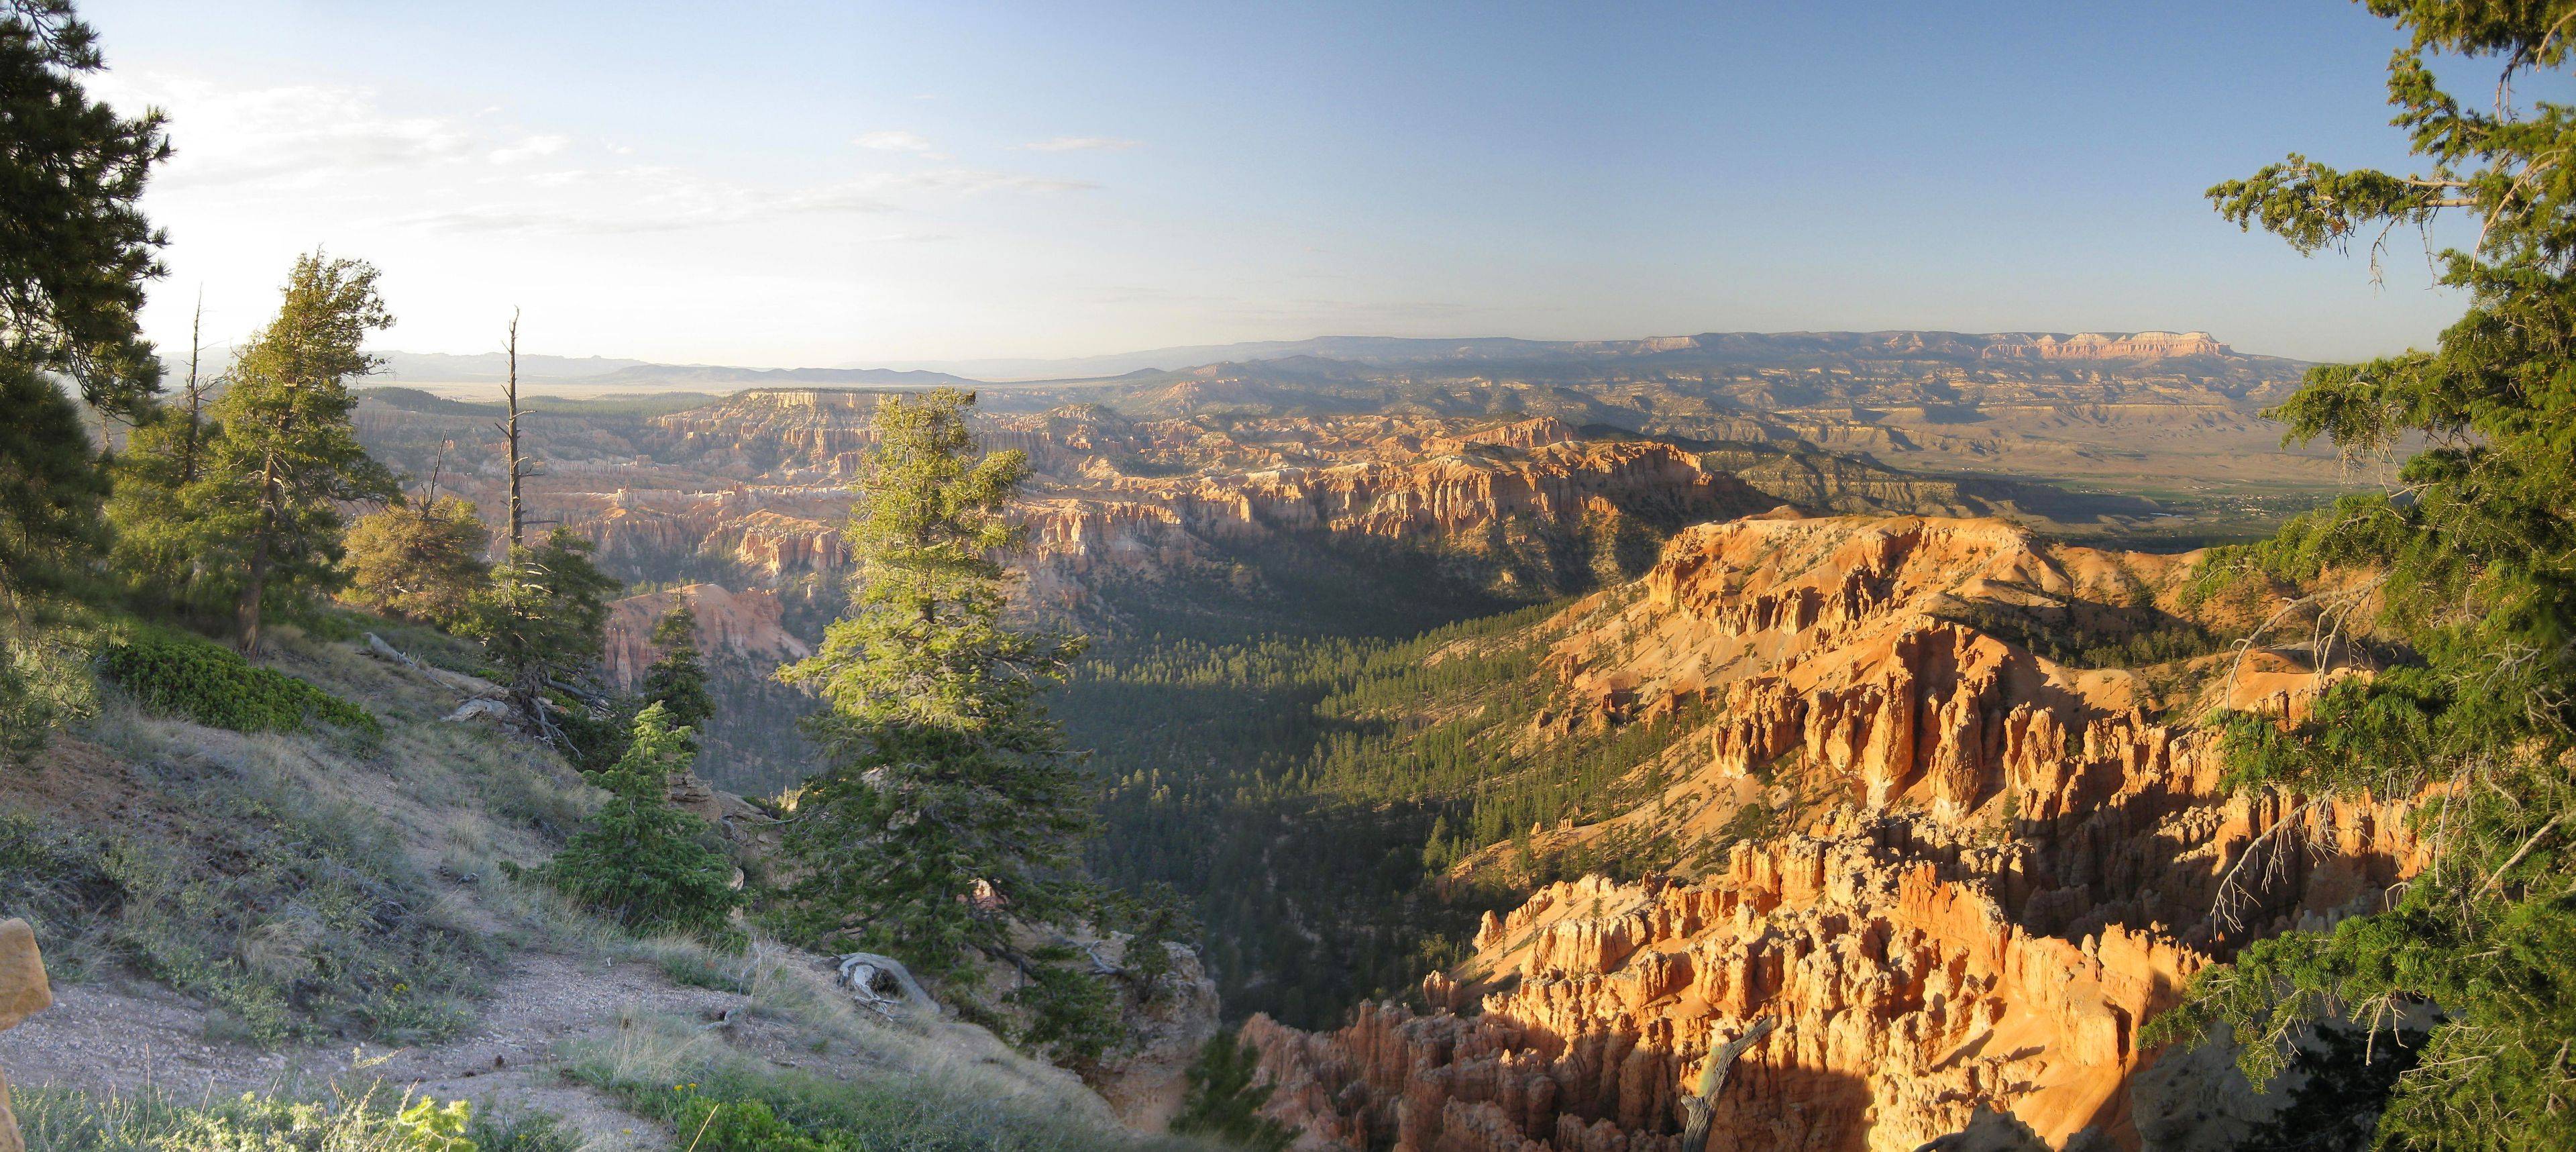 Le Bryce Canyon